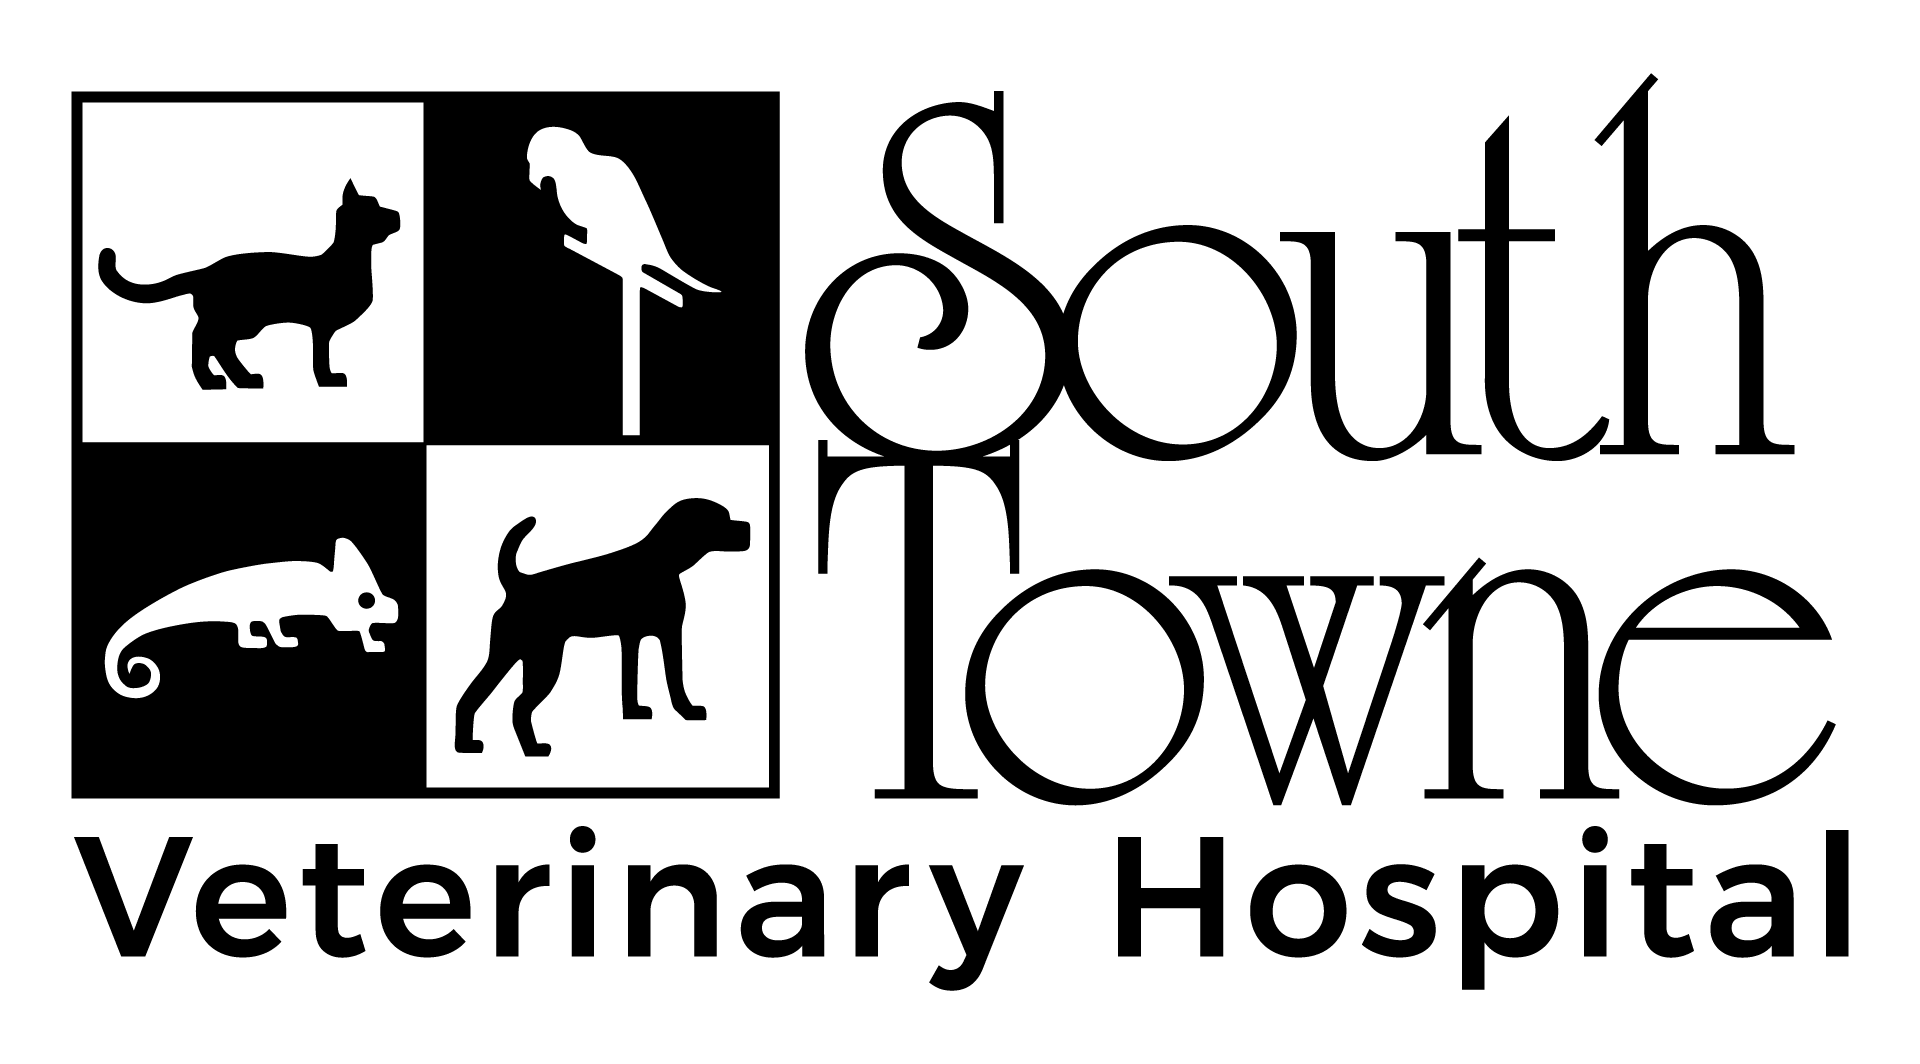 South Towne Veterinary Hospital